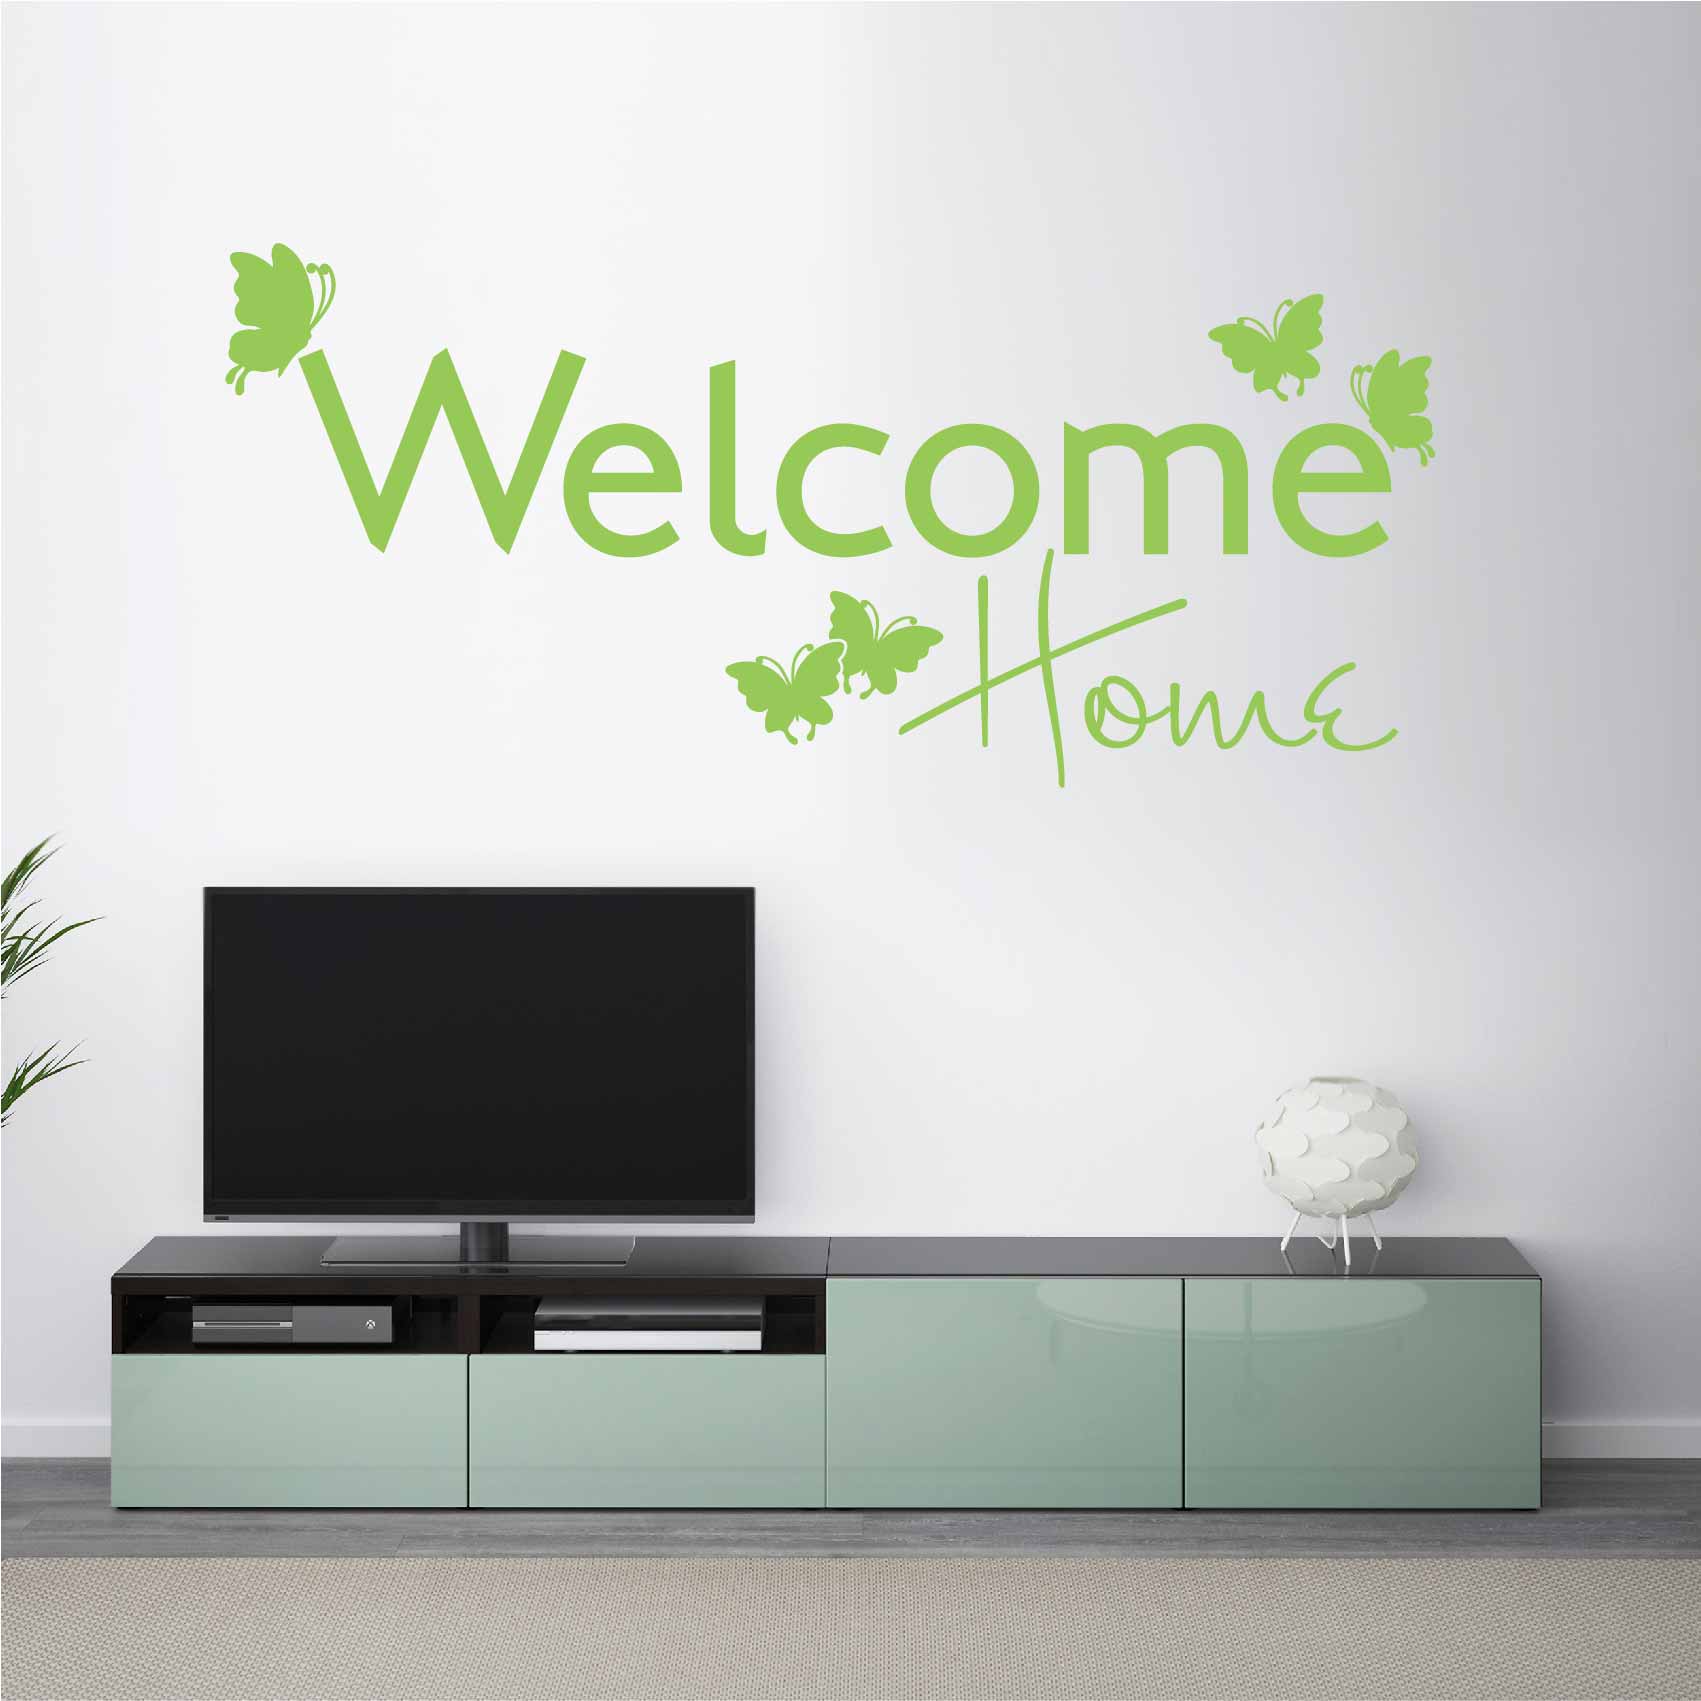 stickers-welcome-home-ref8welcome-autocollant-muraux-bienvenue-sticker-mural-welcome-home-sweet-home-entrée-séjour-salon-cuisine-porte-deco